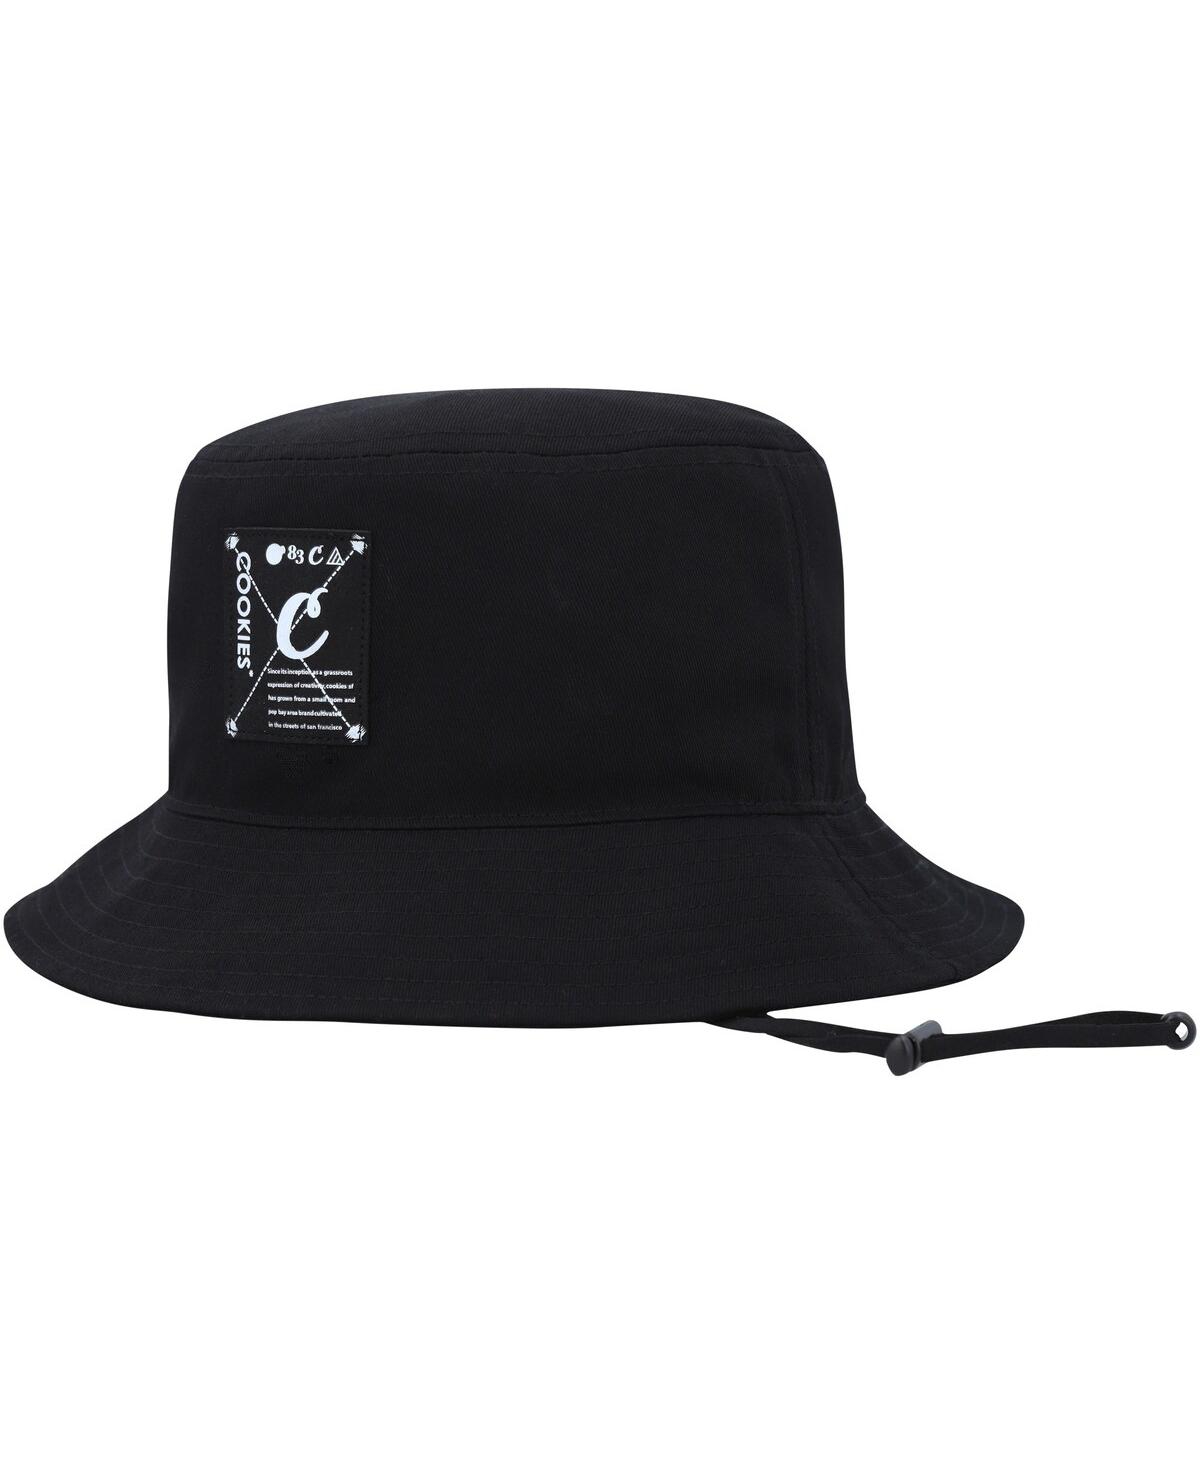 Men's Cookies Clothing Black Key Largo Bucket Hat - Black